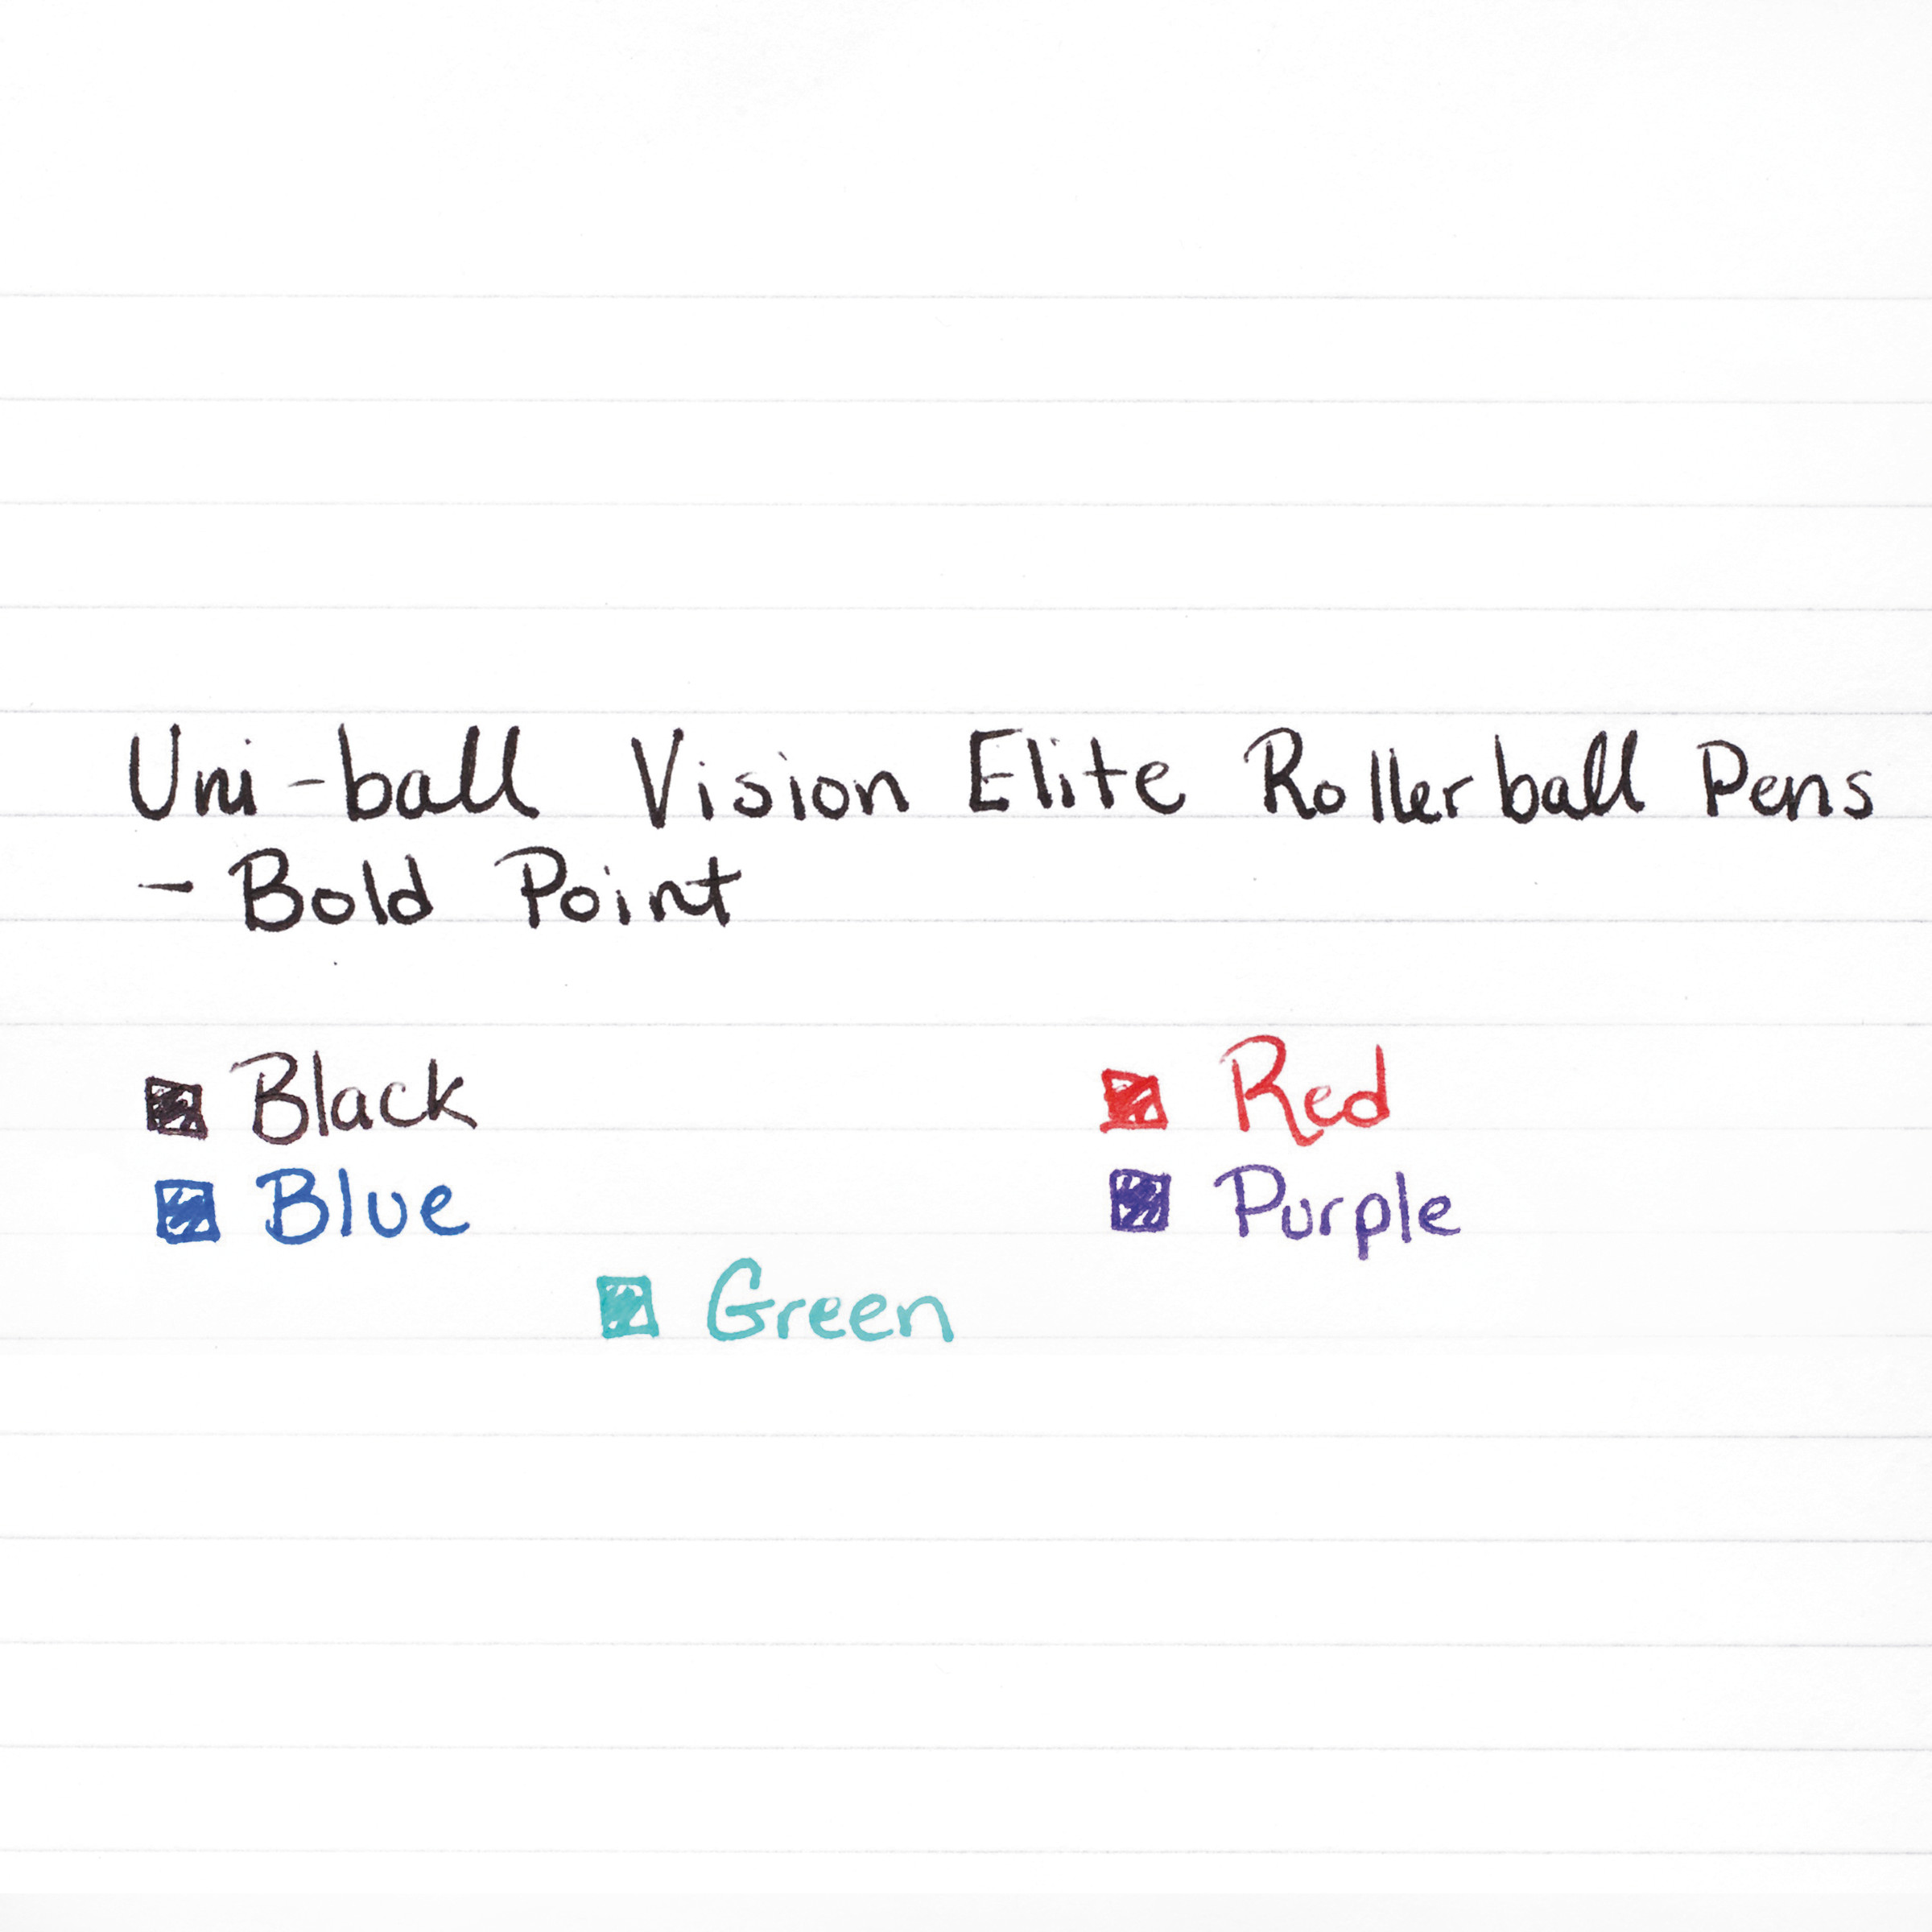 uni-ball Vision Elite Rollerball Pen, Bold Point, Black - image 2 of 2